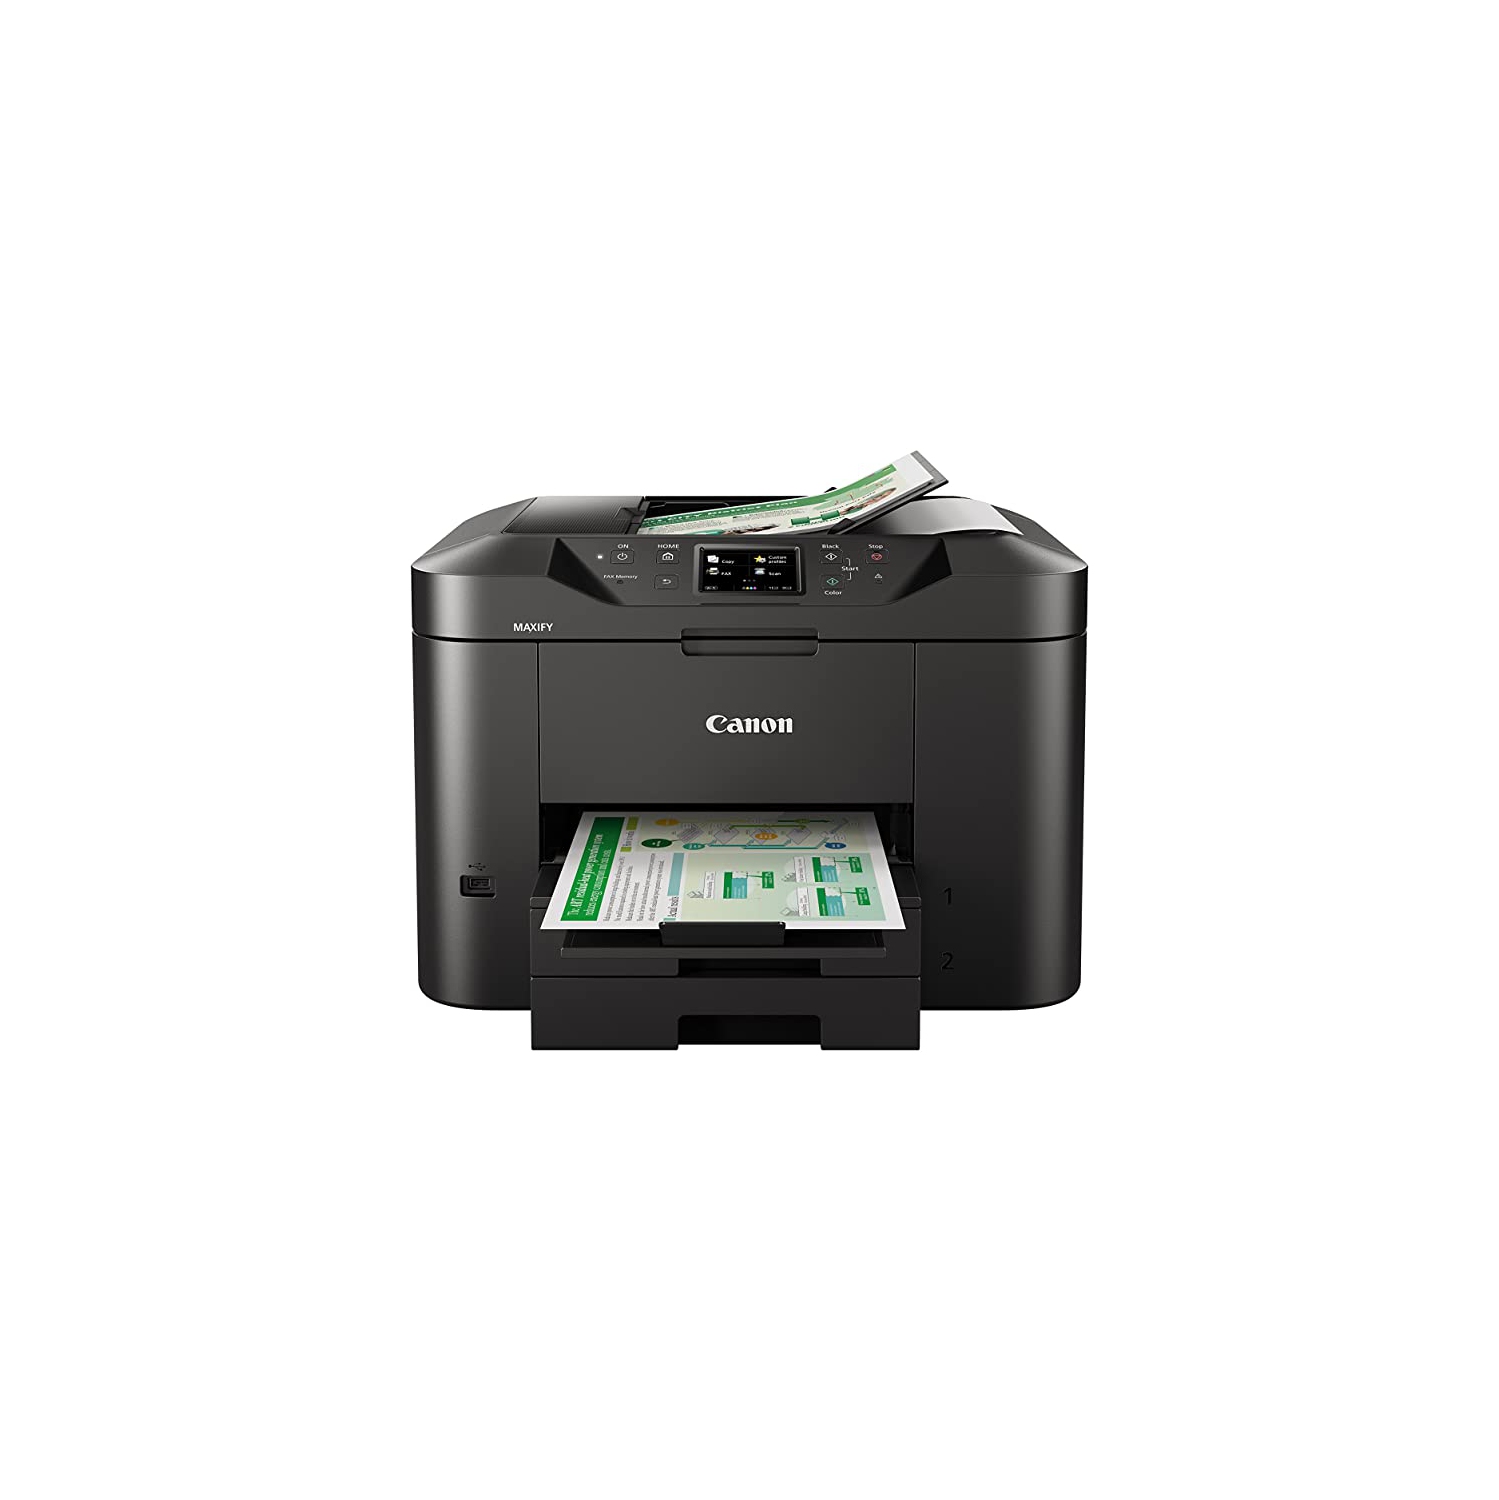 Canon Maxify MB2720 Wireless Colour Printer with Scanner, Copier & Fax, Black - Open Box